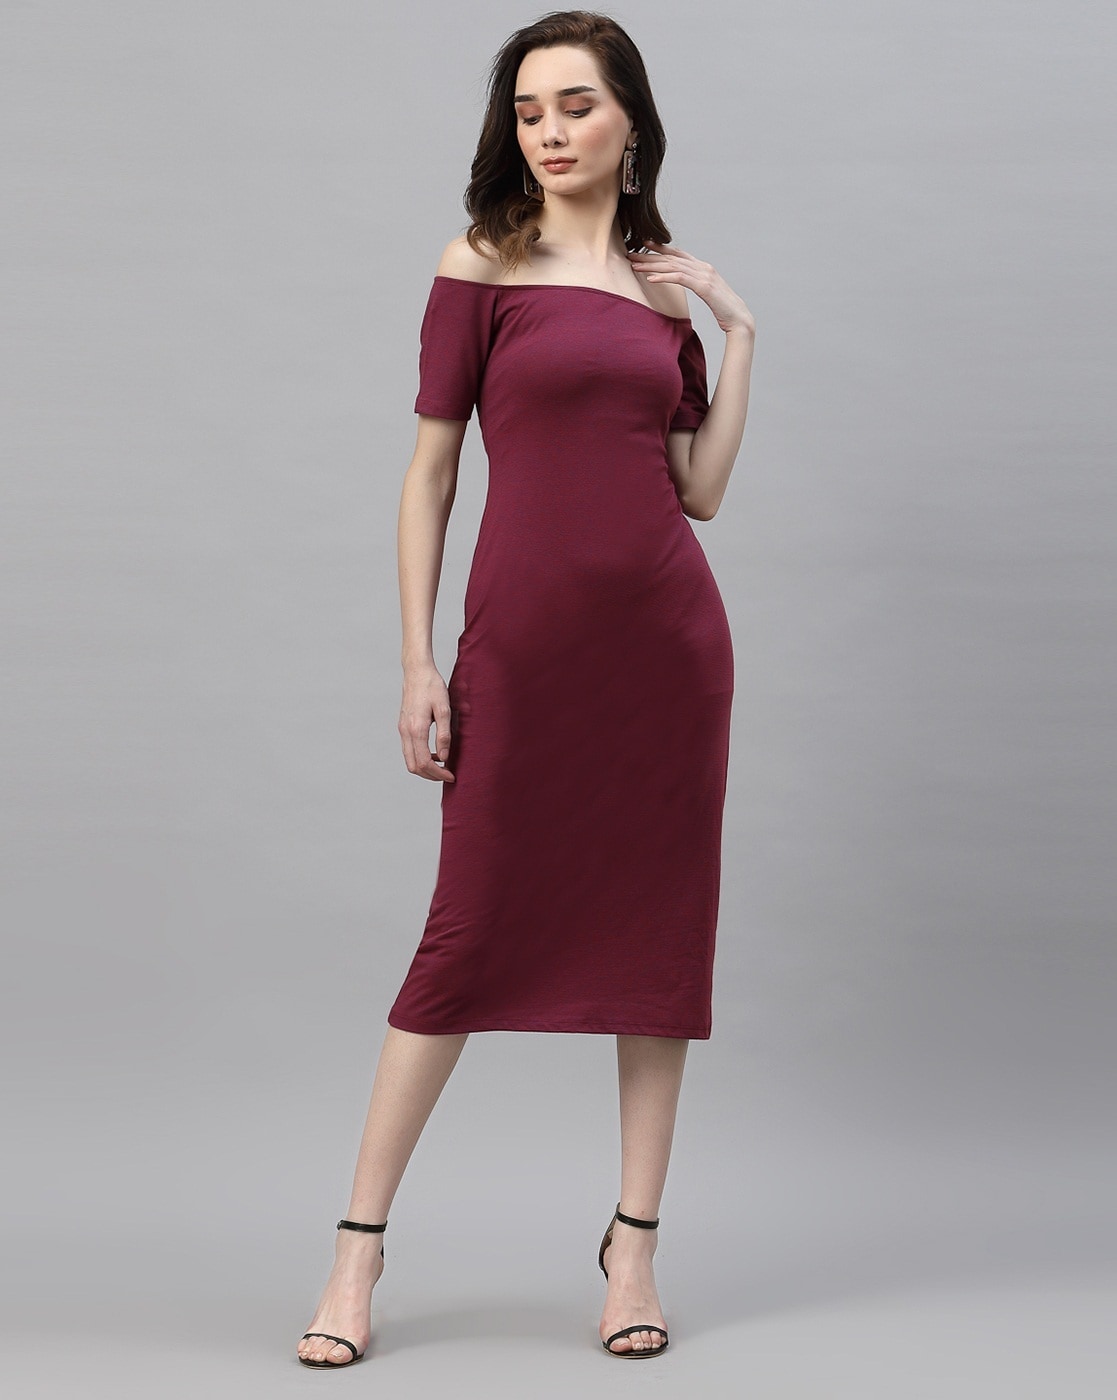 Buy Black Dresses for Women by FOUNDRY Online | Ajio.com